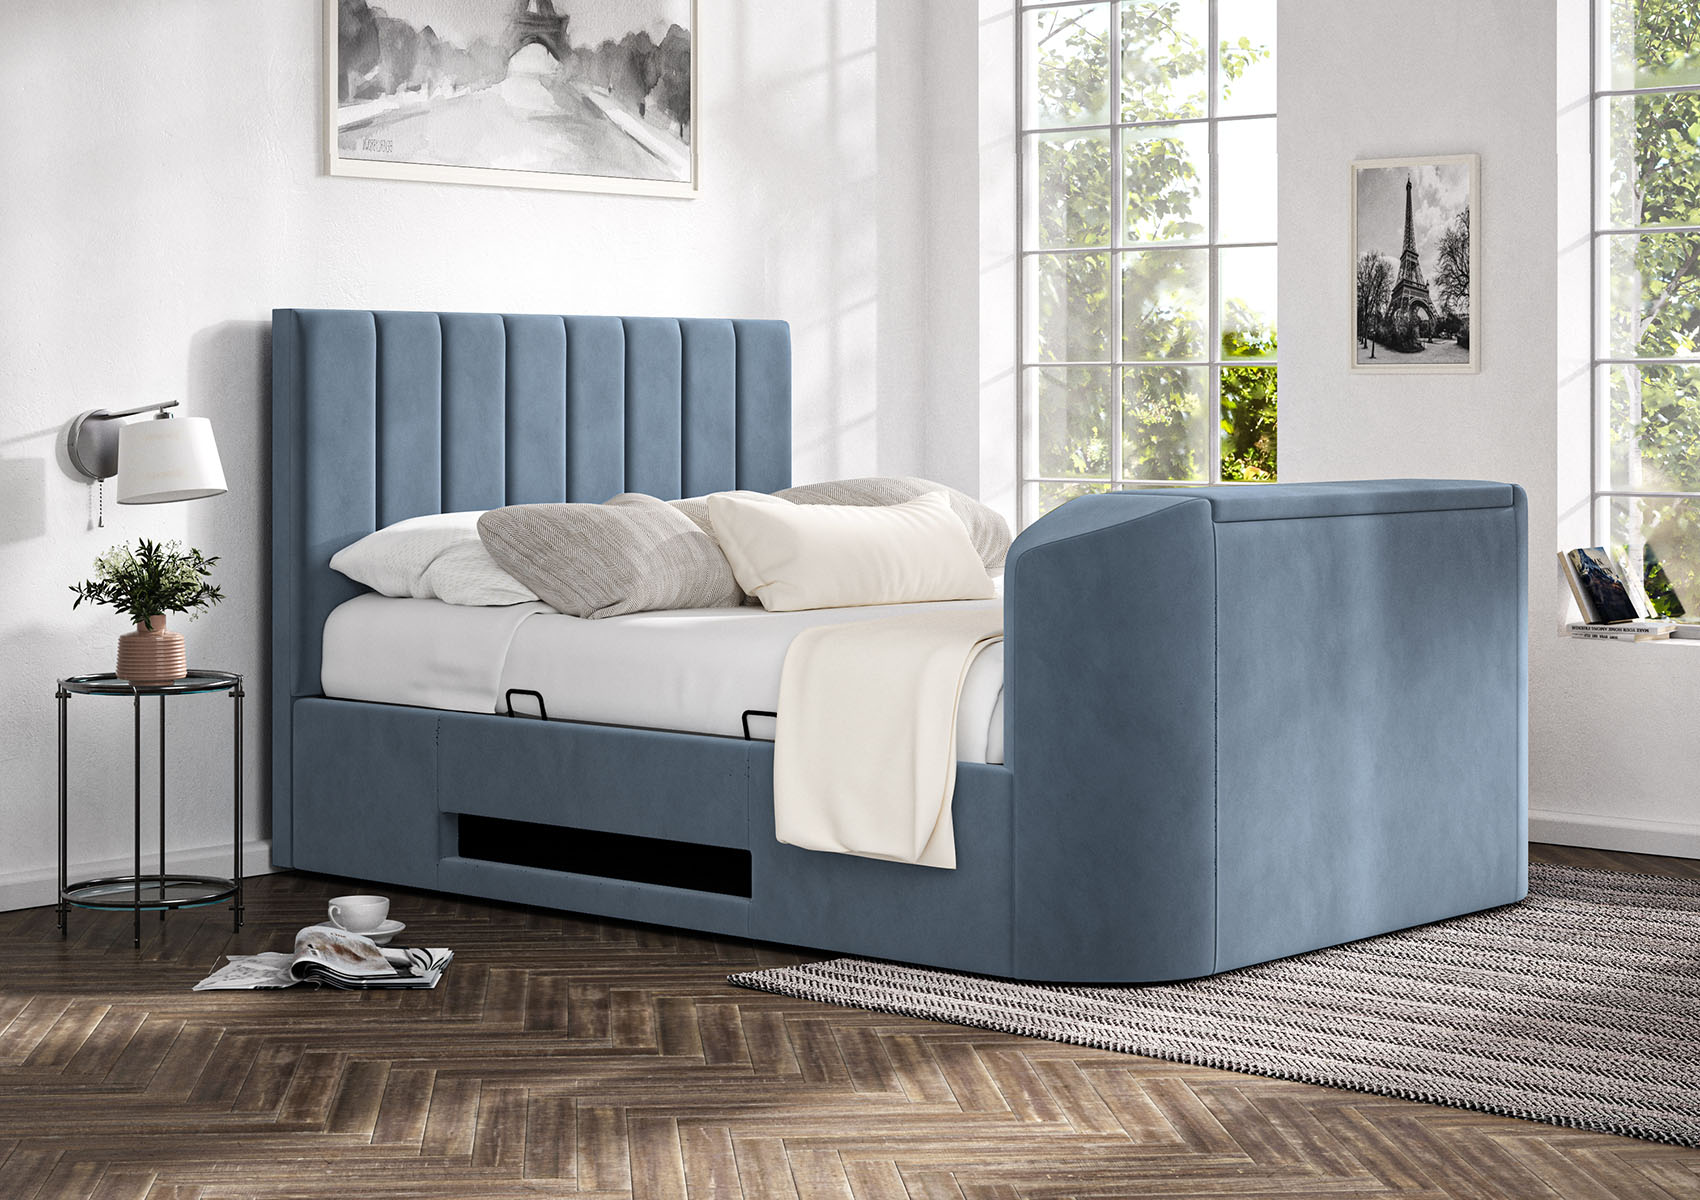 View Berkley Upholstered Hugo Wedgewood Multifunctional Ottoman Smart TV Bed Bed Frame Only Time4Sleep information